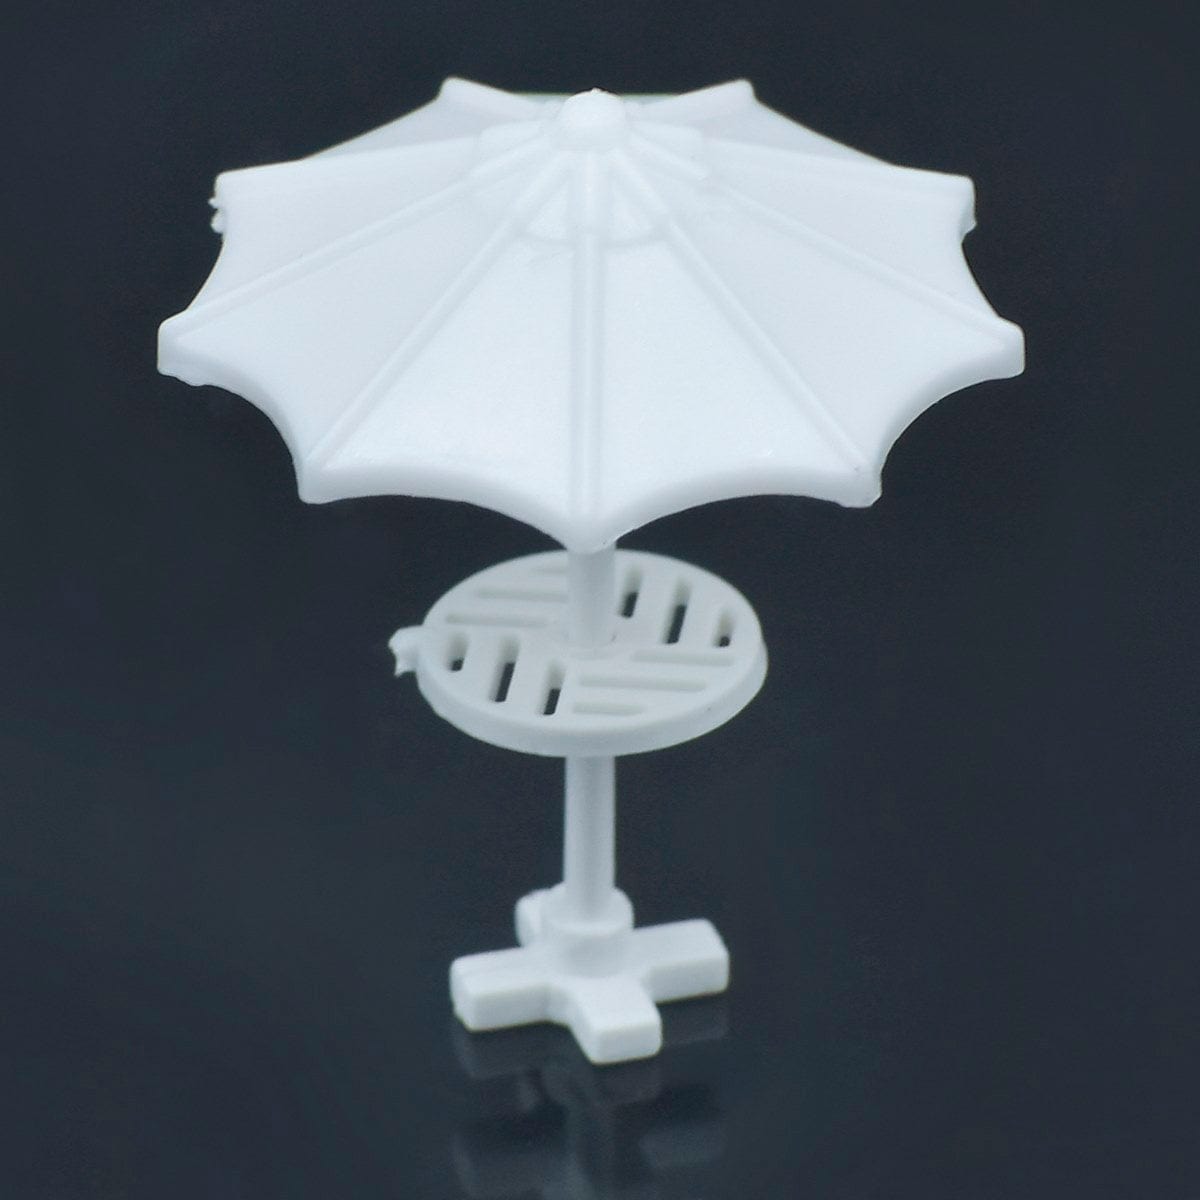 jags-mumbai Miniature Model Miniature Model Umbrella Set Of 2 Pics PTS1.150